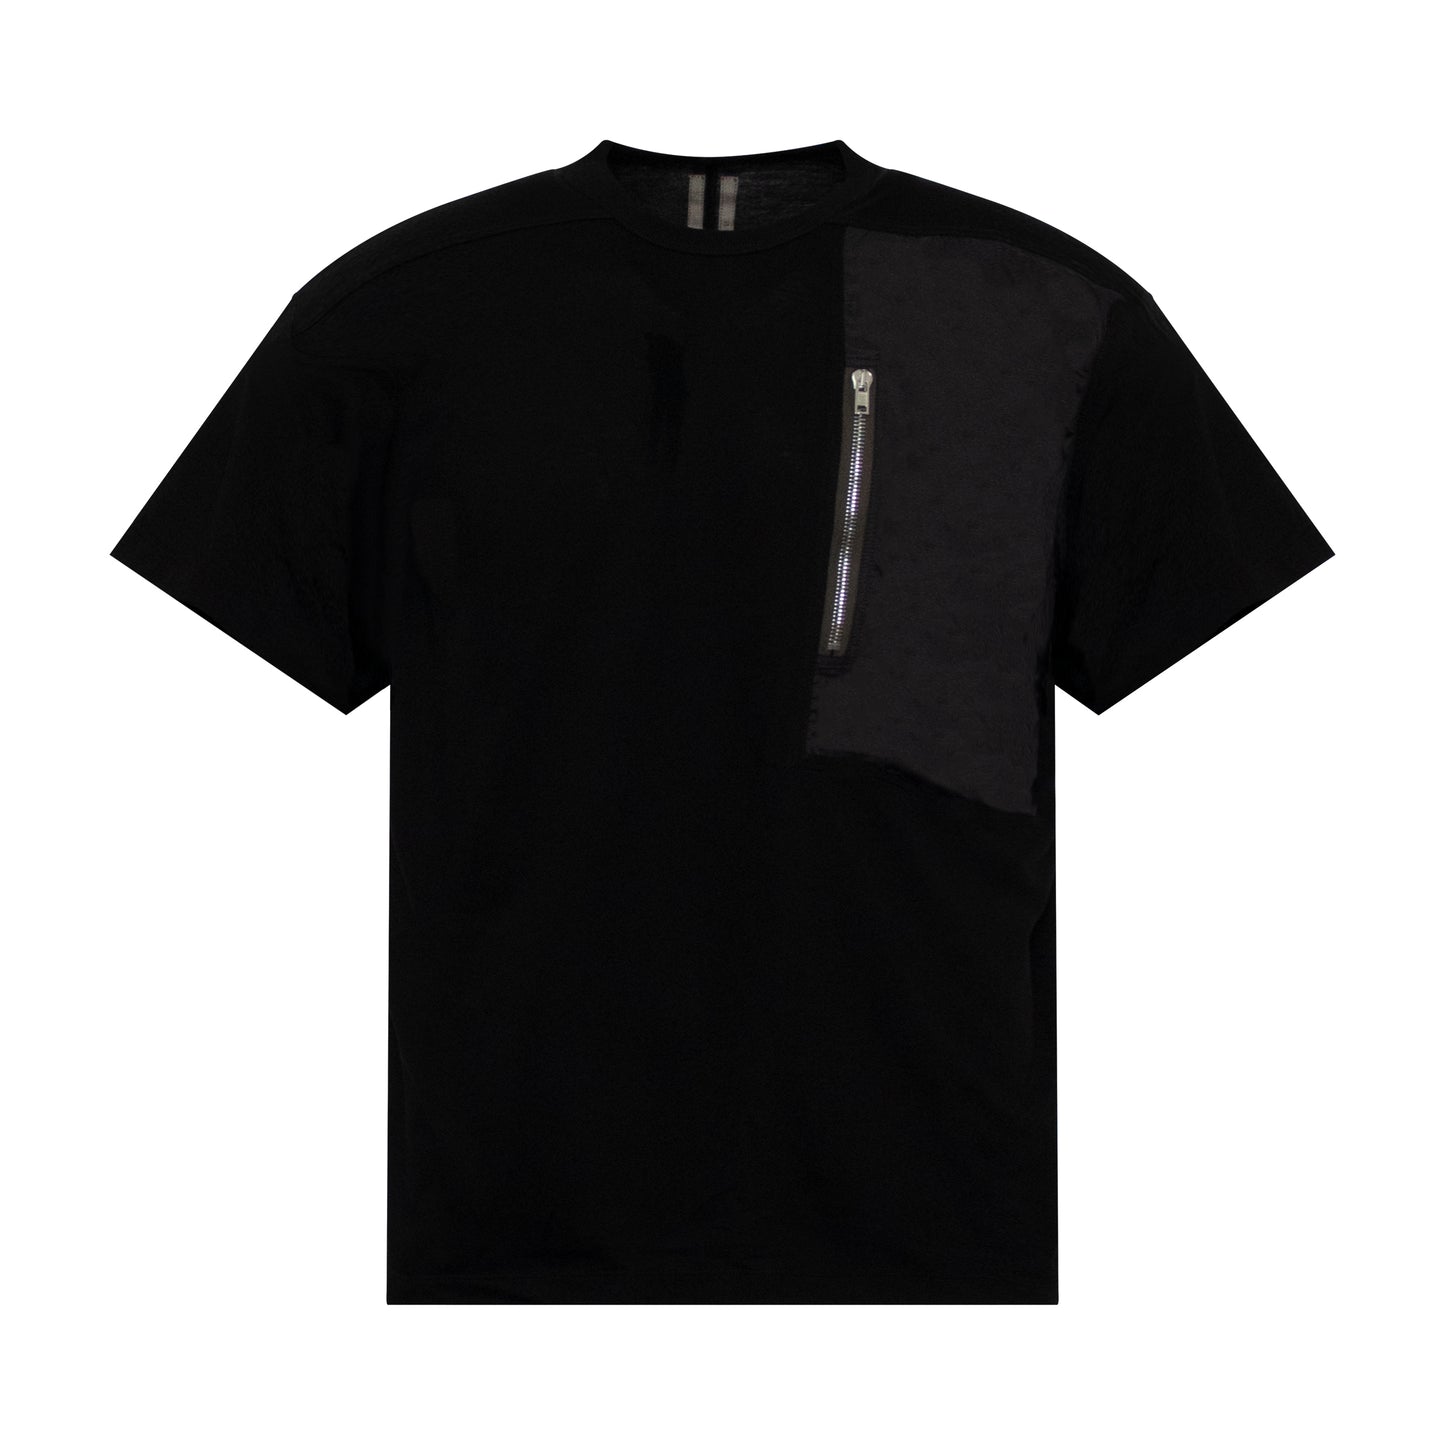 Ss Pocket Level T-Shirt in Black